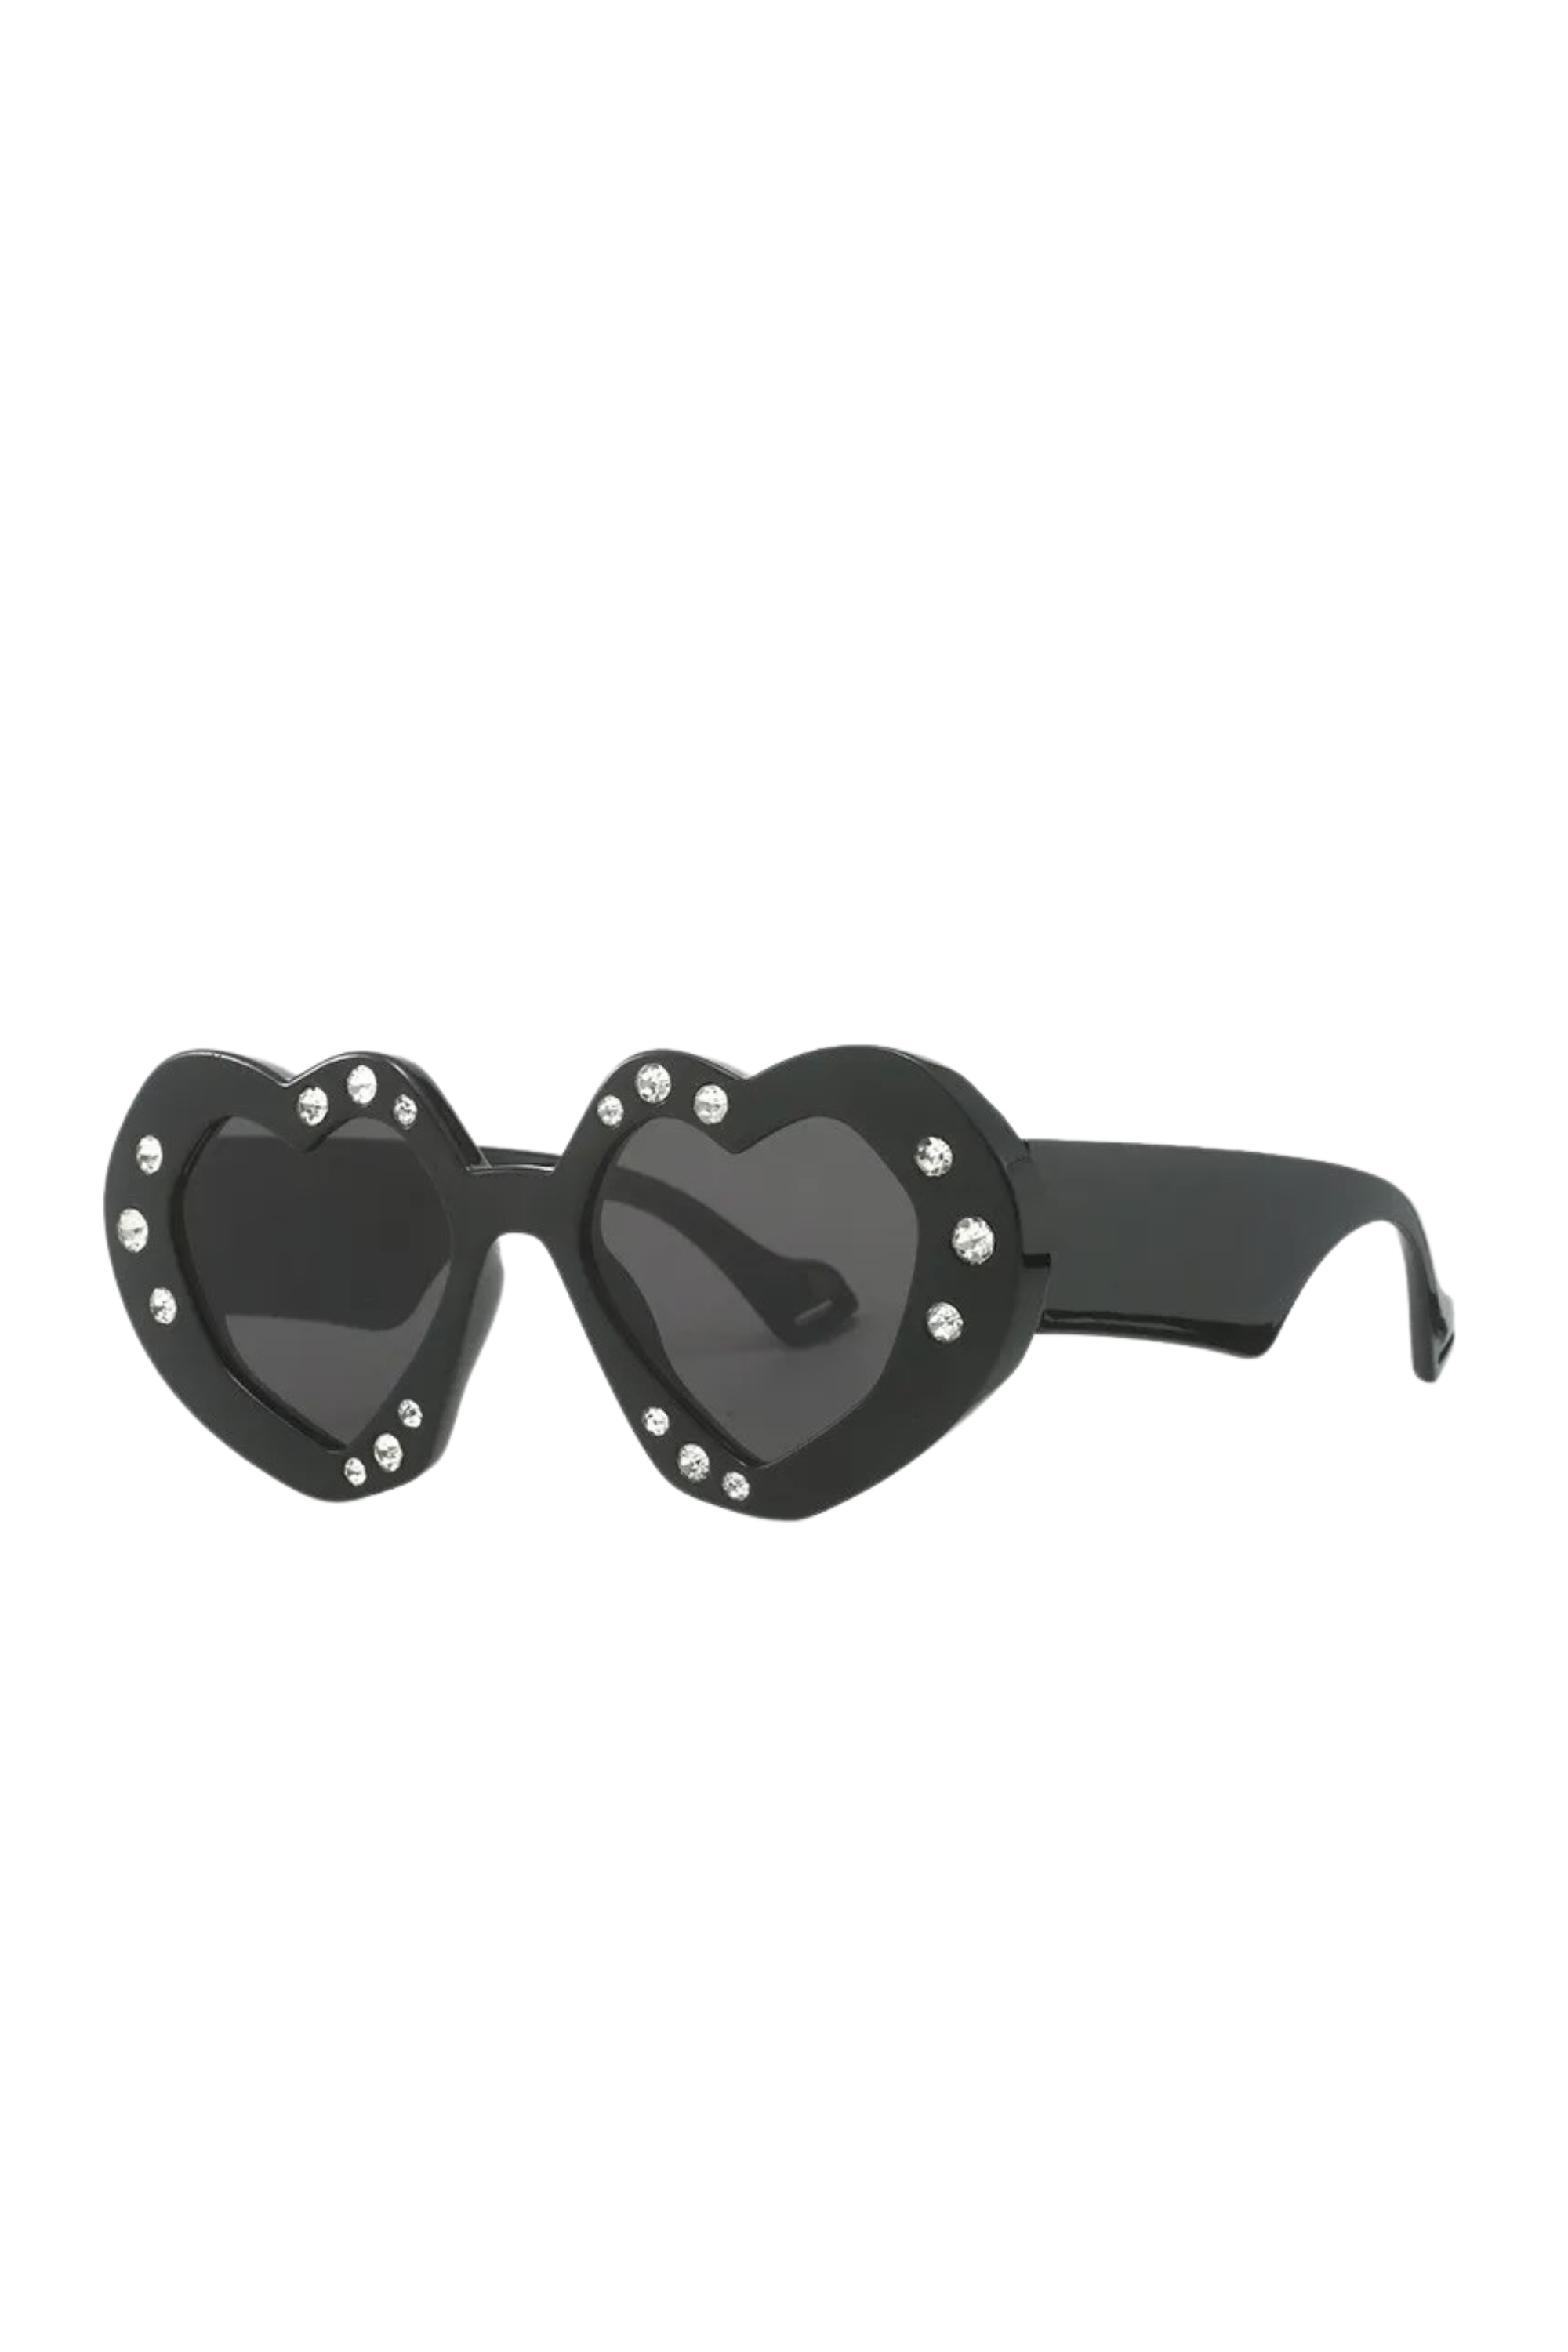 GOLDxTEAL oversized black heart shaped sunglasses.